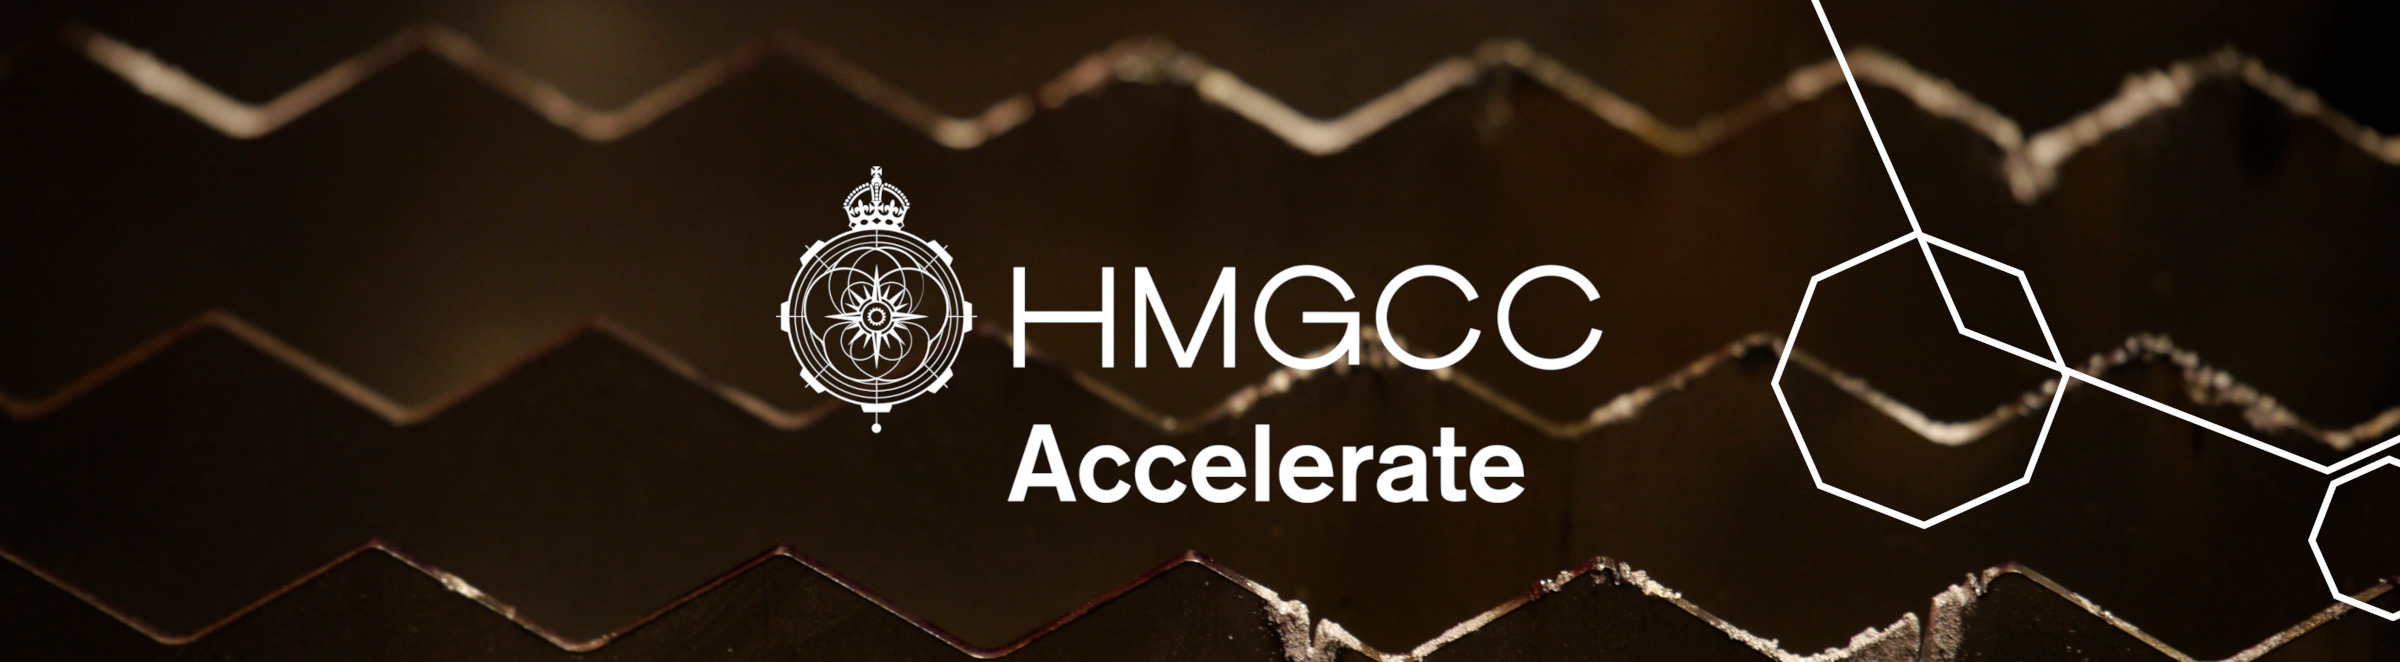 HMGCC Accelerate Logo with HMGCC Crown emblem and Octagon design elements 